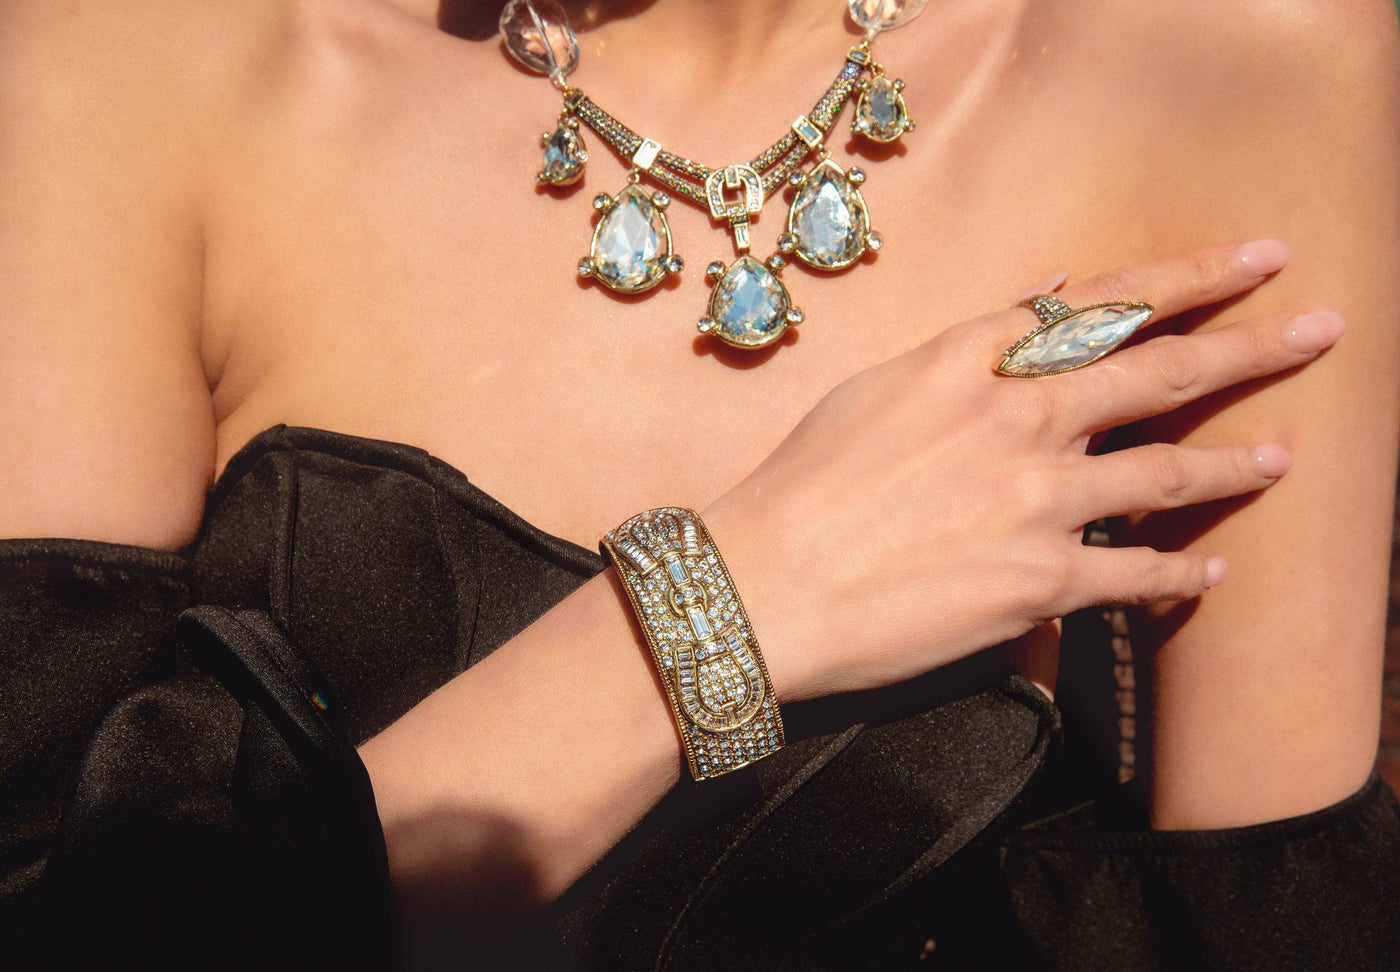 HEIDI DAUS®"St. Barts Rocks" Crystal Deco Bracelet